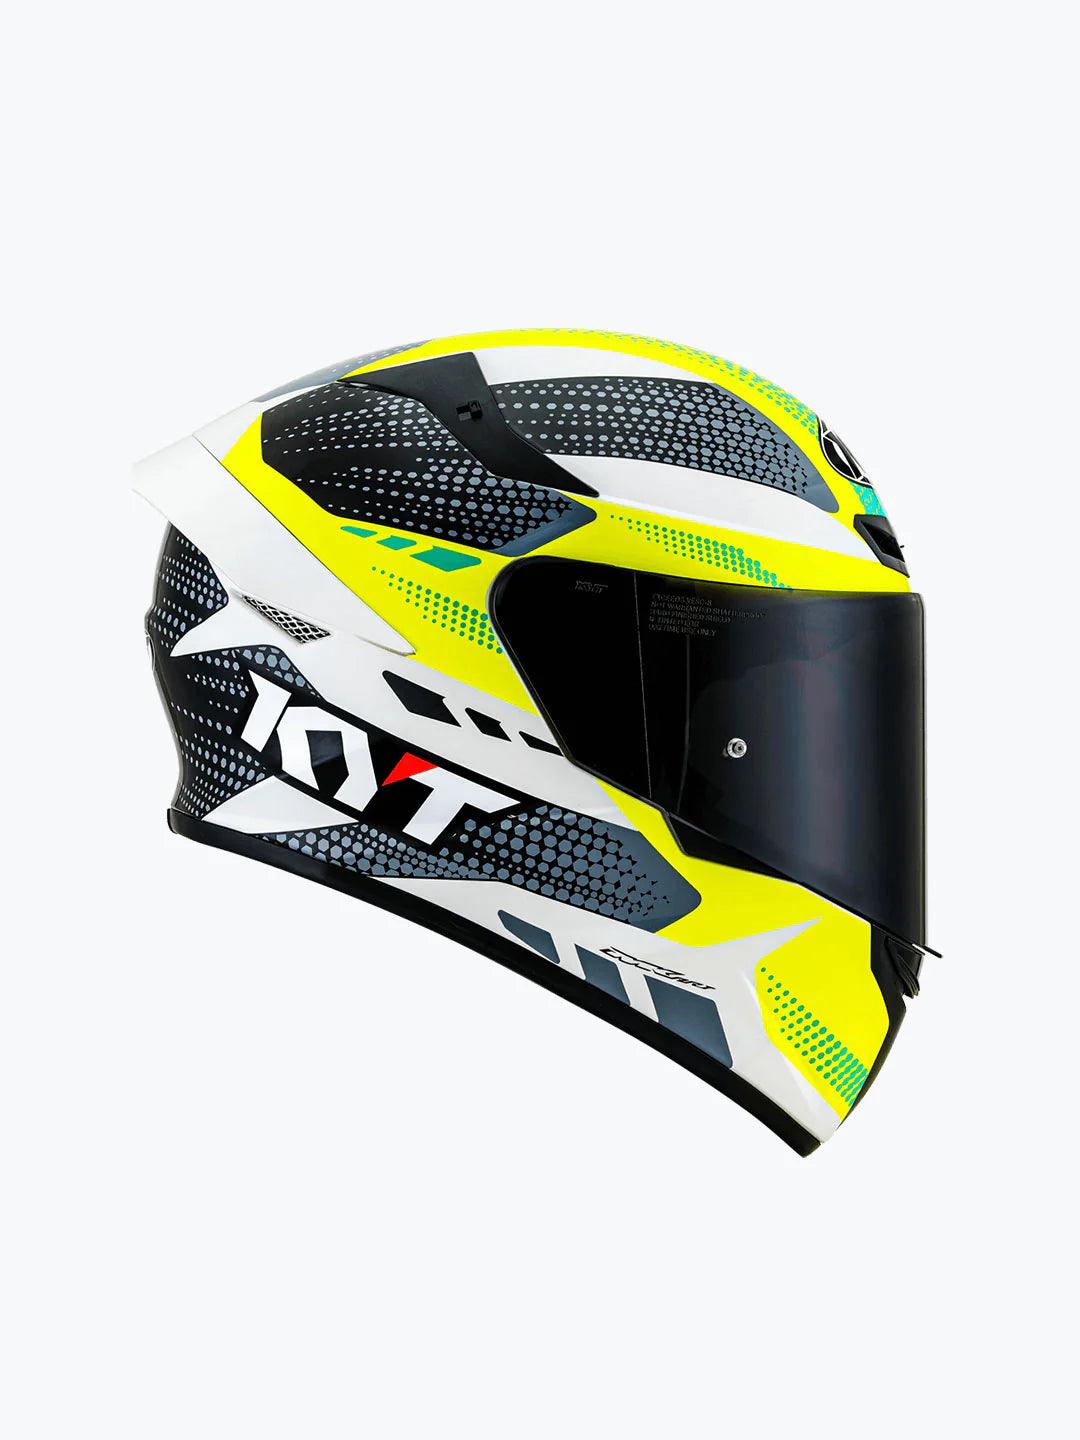 KYT TT Course Gear Black Yellow - Moto Modz